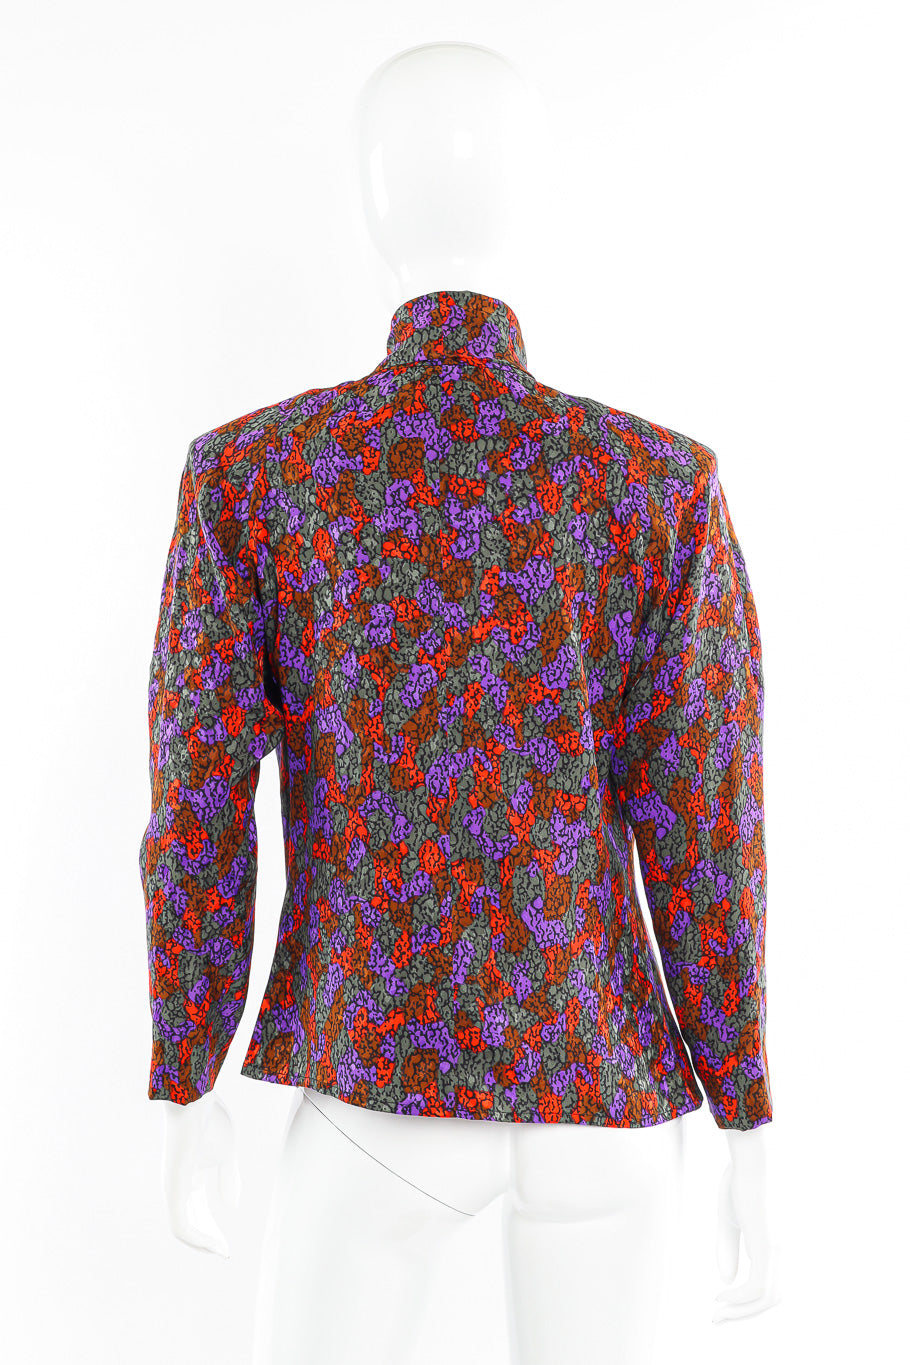 Silk blouse by Yves Saint Laurent on mannequin back @recessla